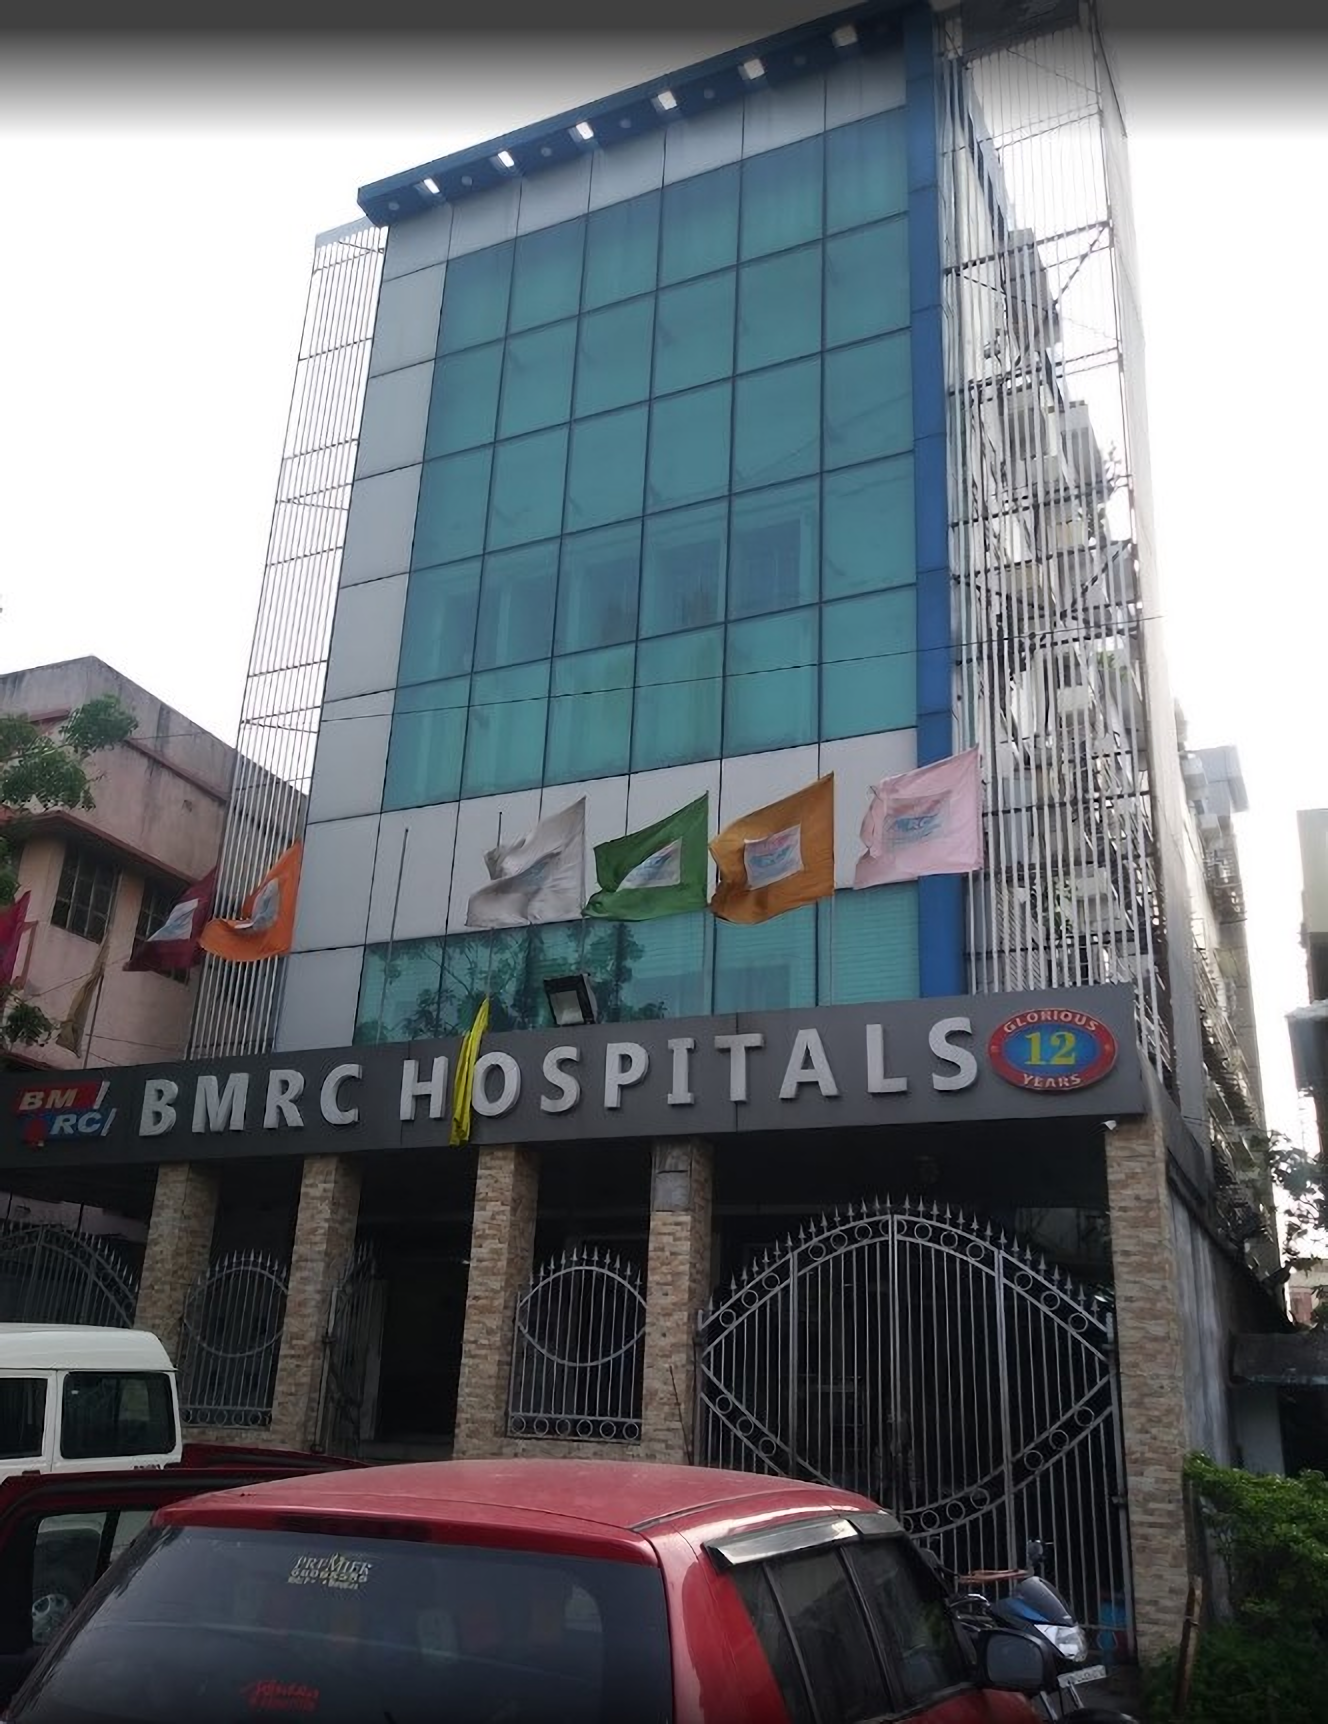 BMRC Hospital